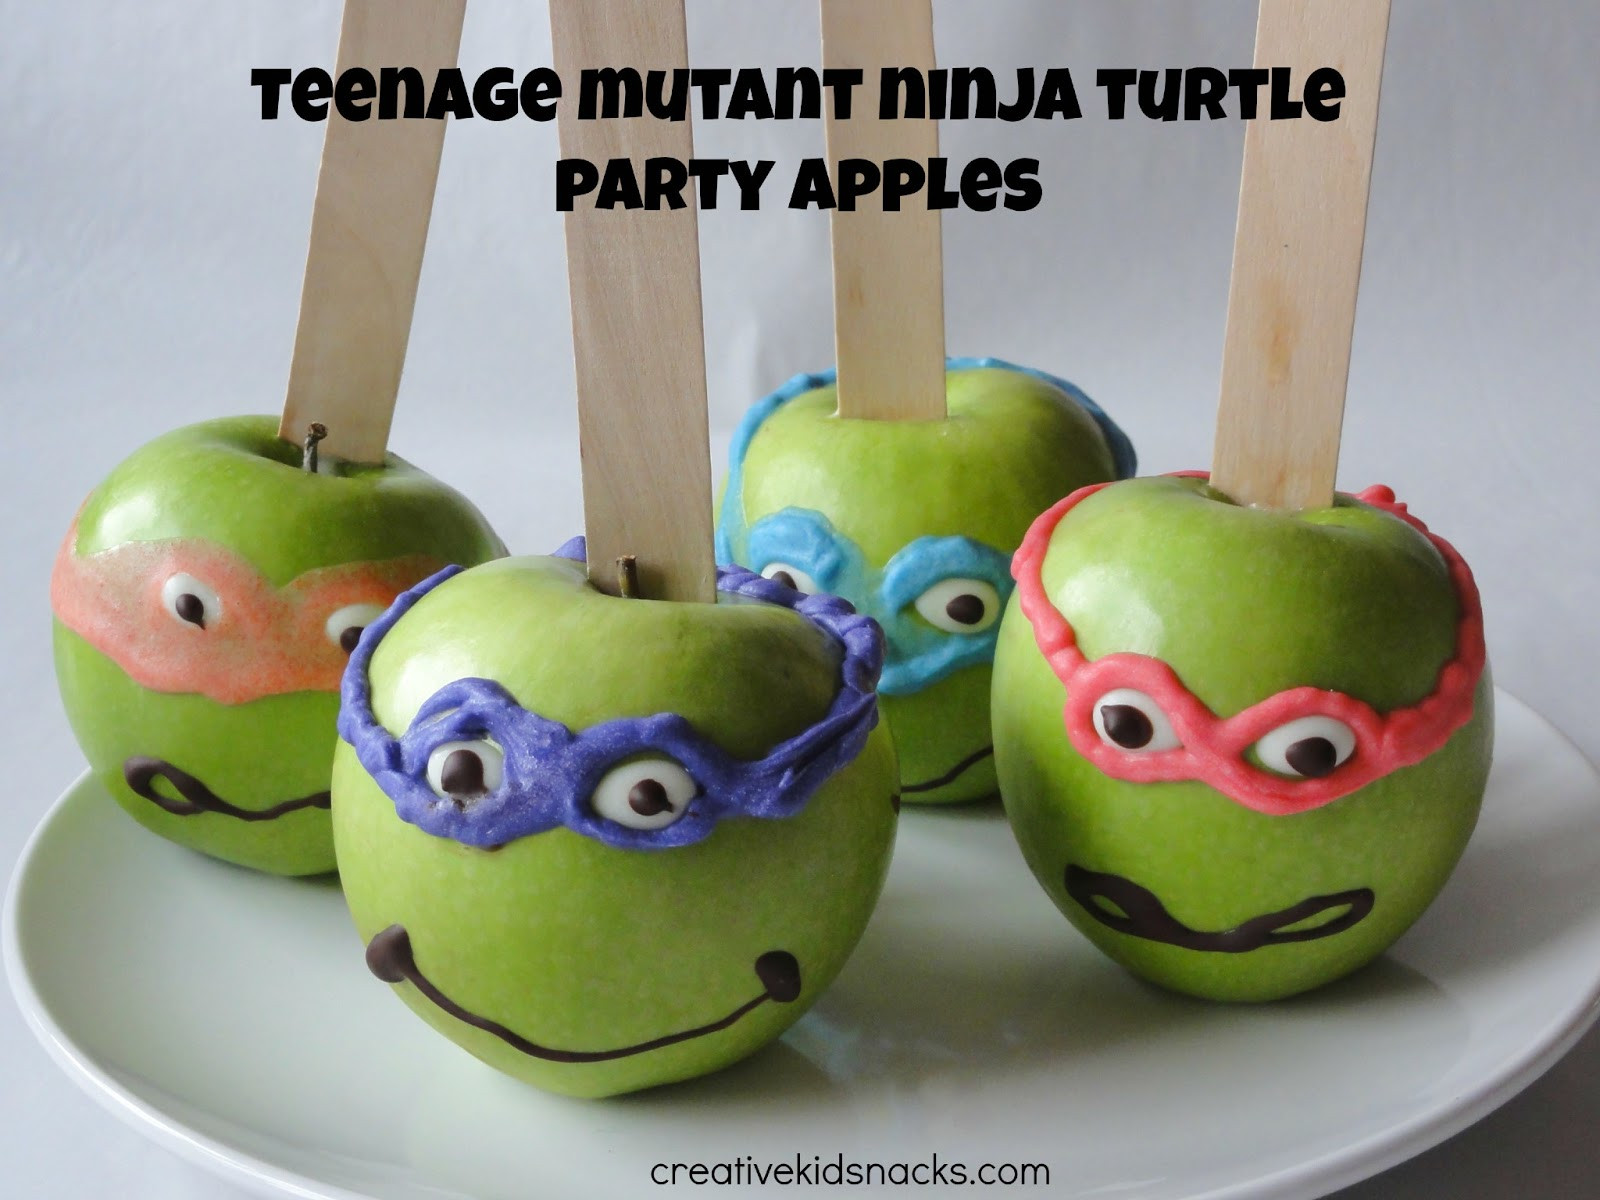 Best ideas about Teenage Mutant Ninja Turtle Birthday Party
. Save or Pin Teenage Mutant NInja Turtle Party Now.